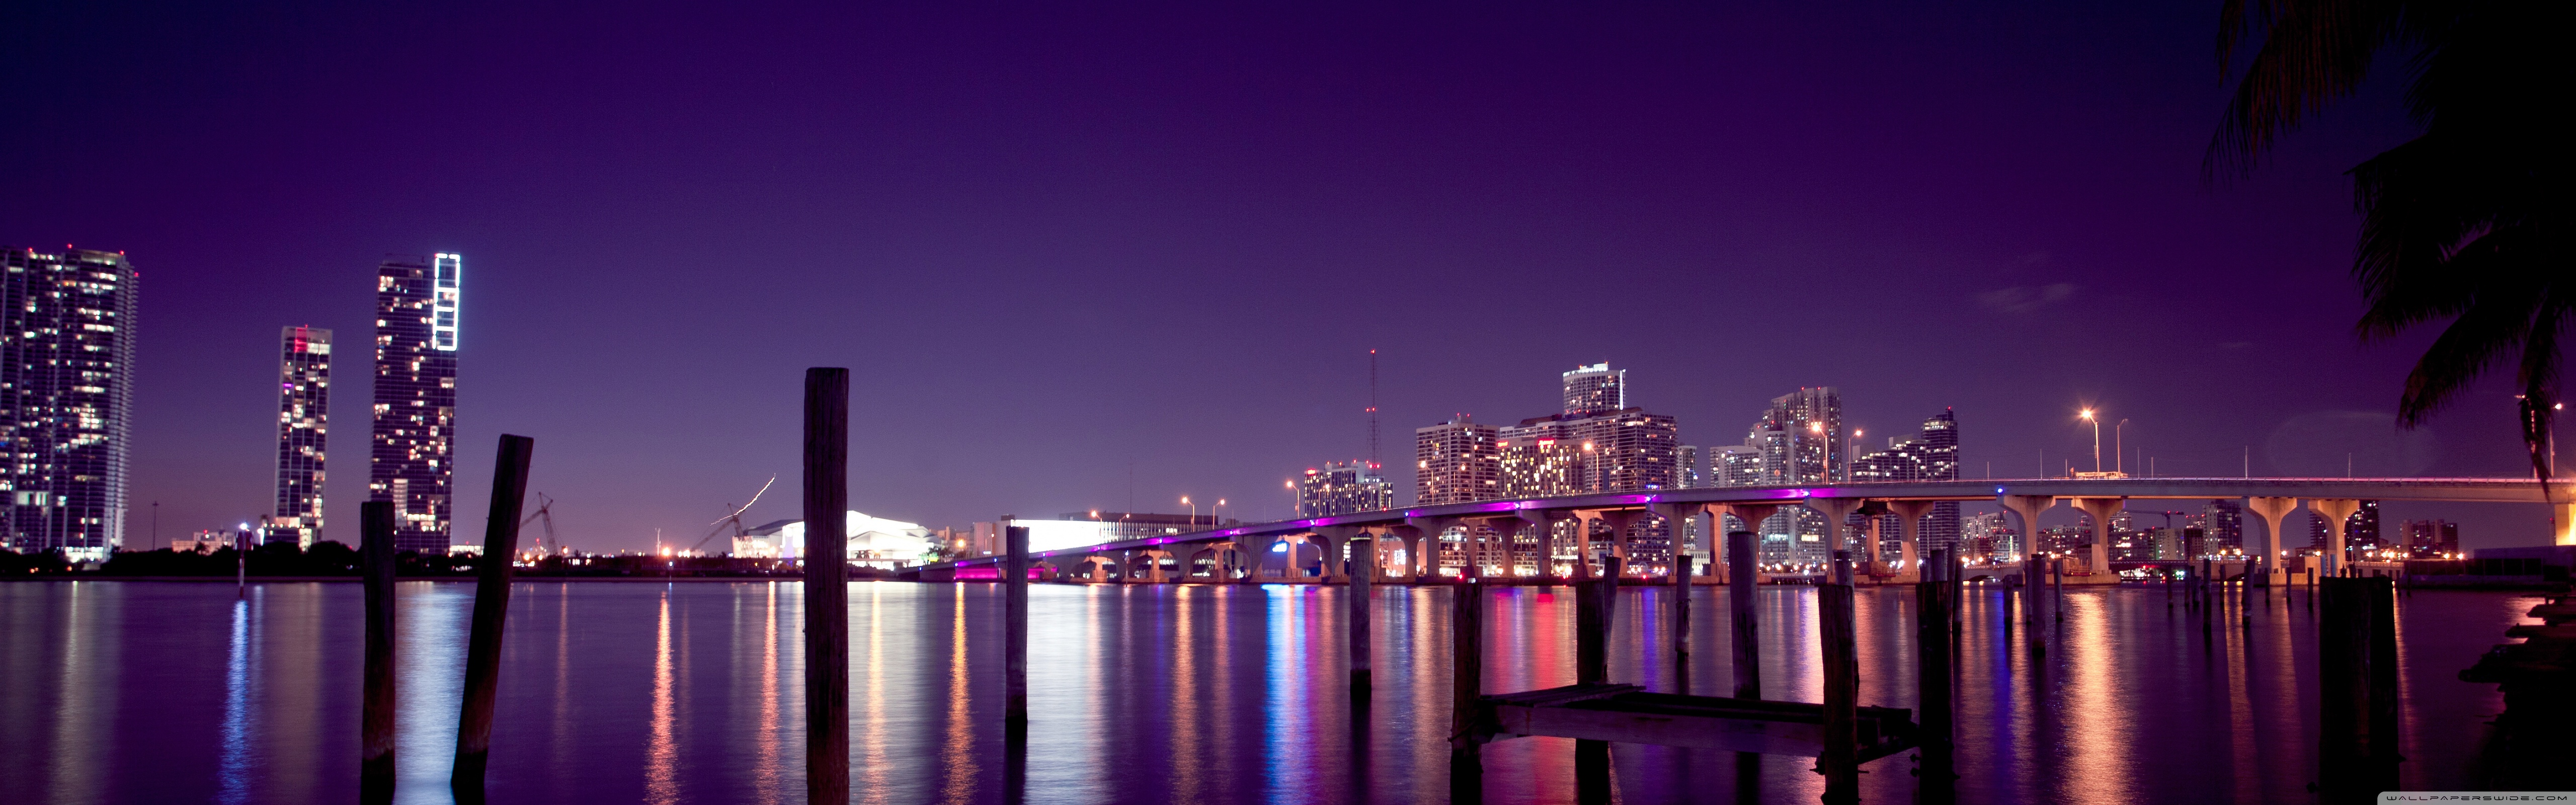 Photography Landscape Night City - HD Wallpaper 